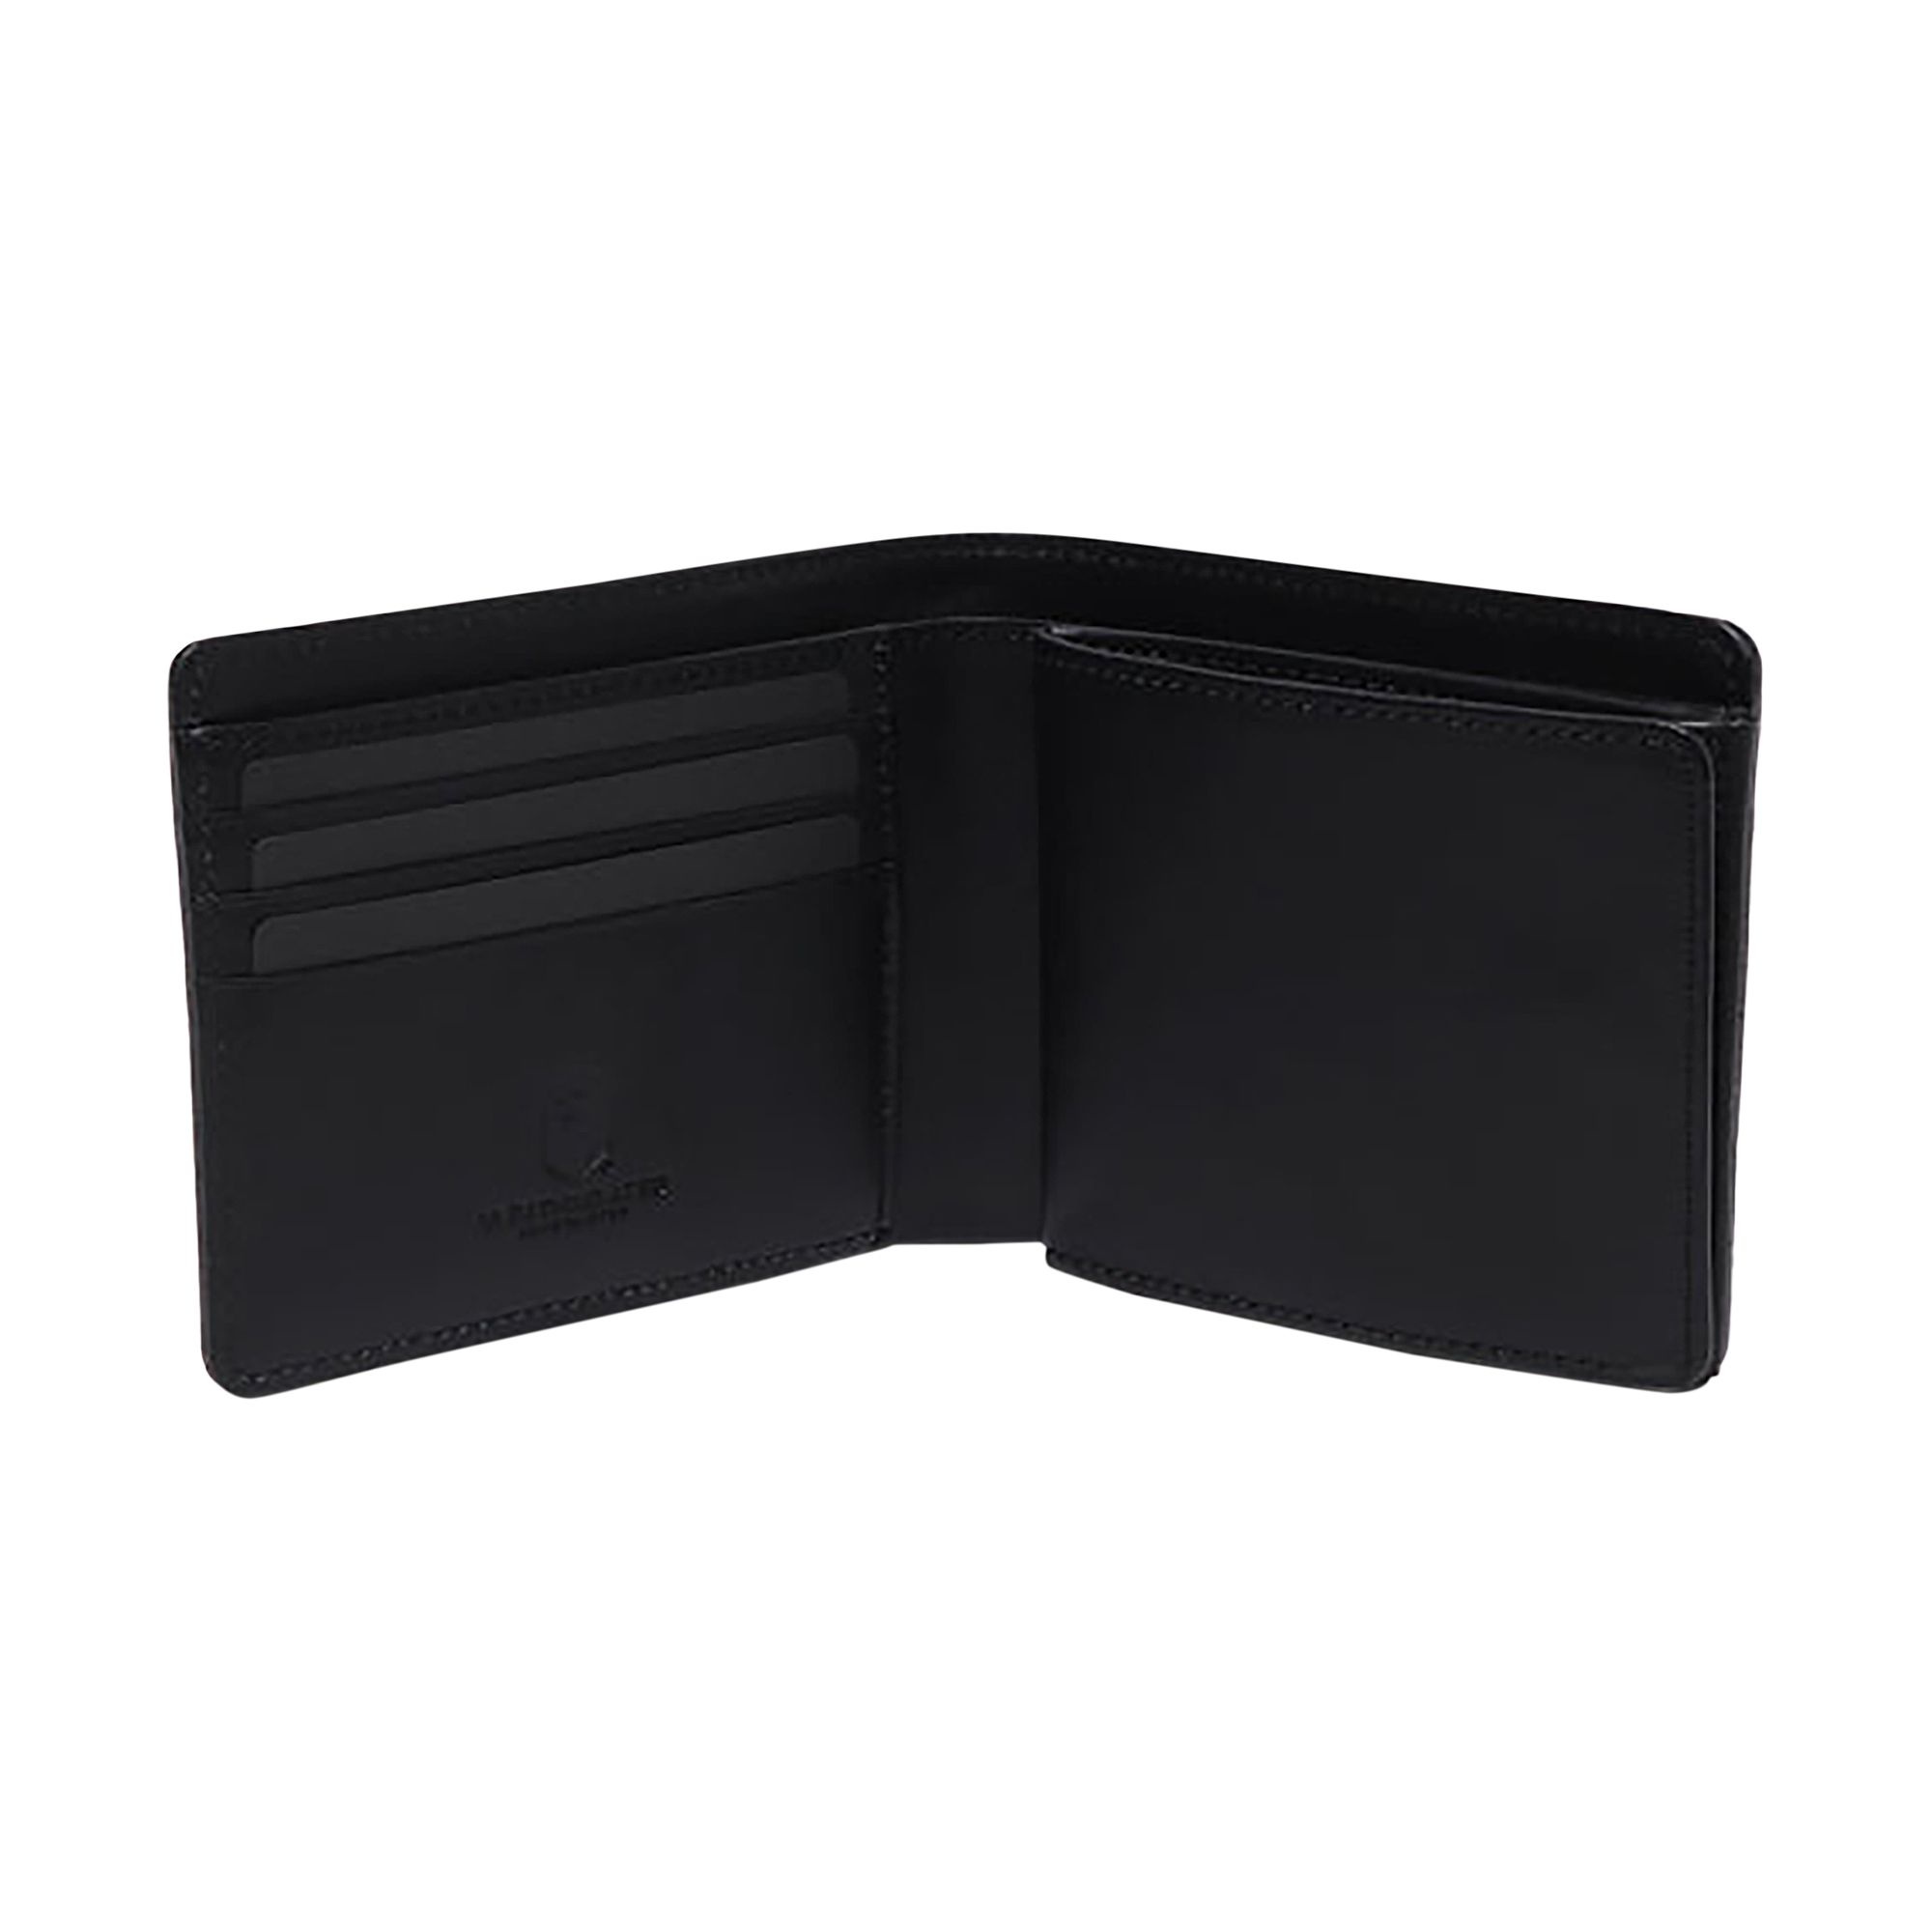 BAPE Solid Camo Leather Wallet #1 'Black' - 2